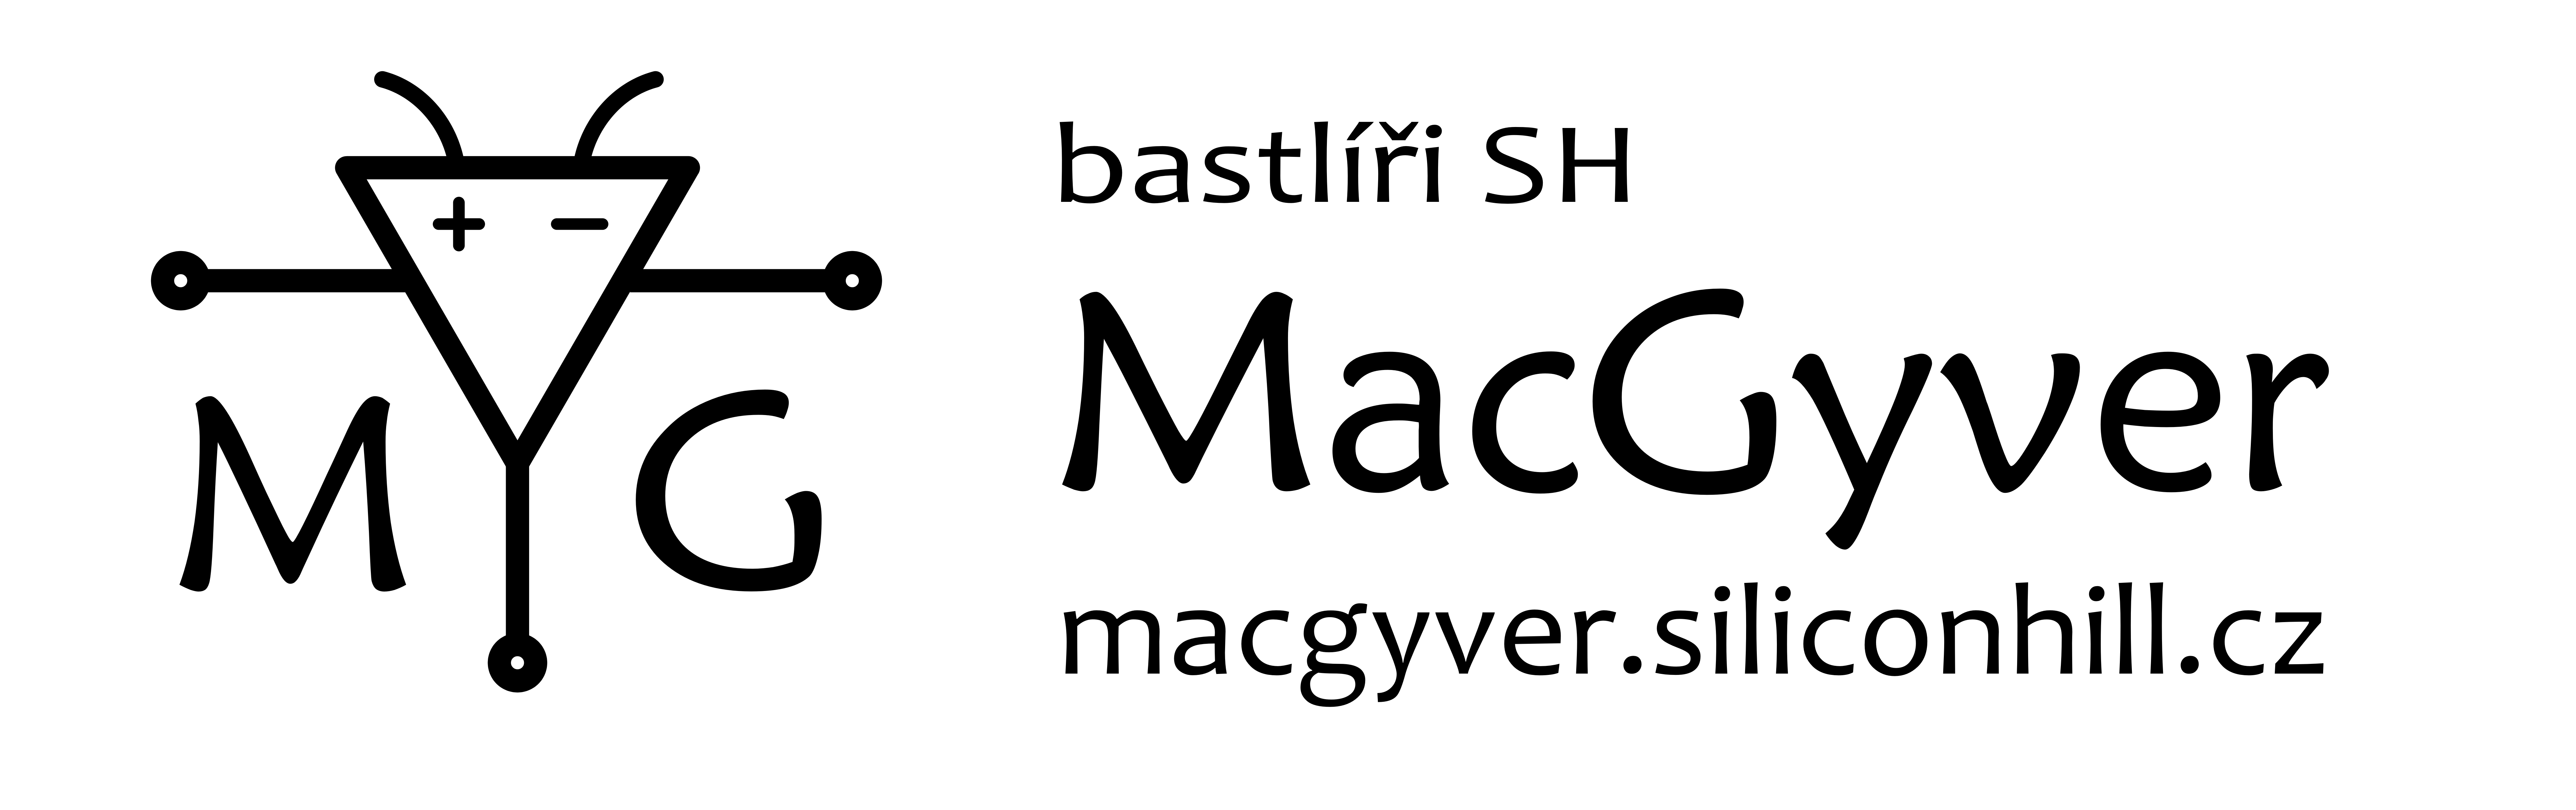 projekty-loga:macgyver-bastliri-logo.png